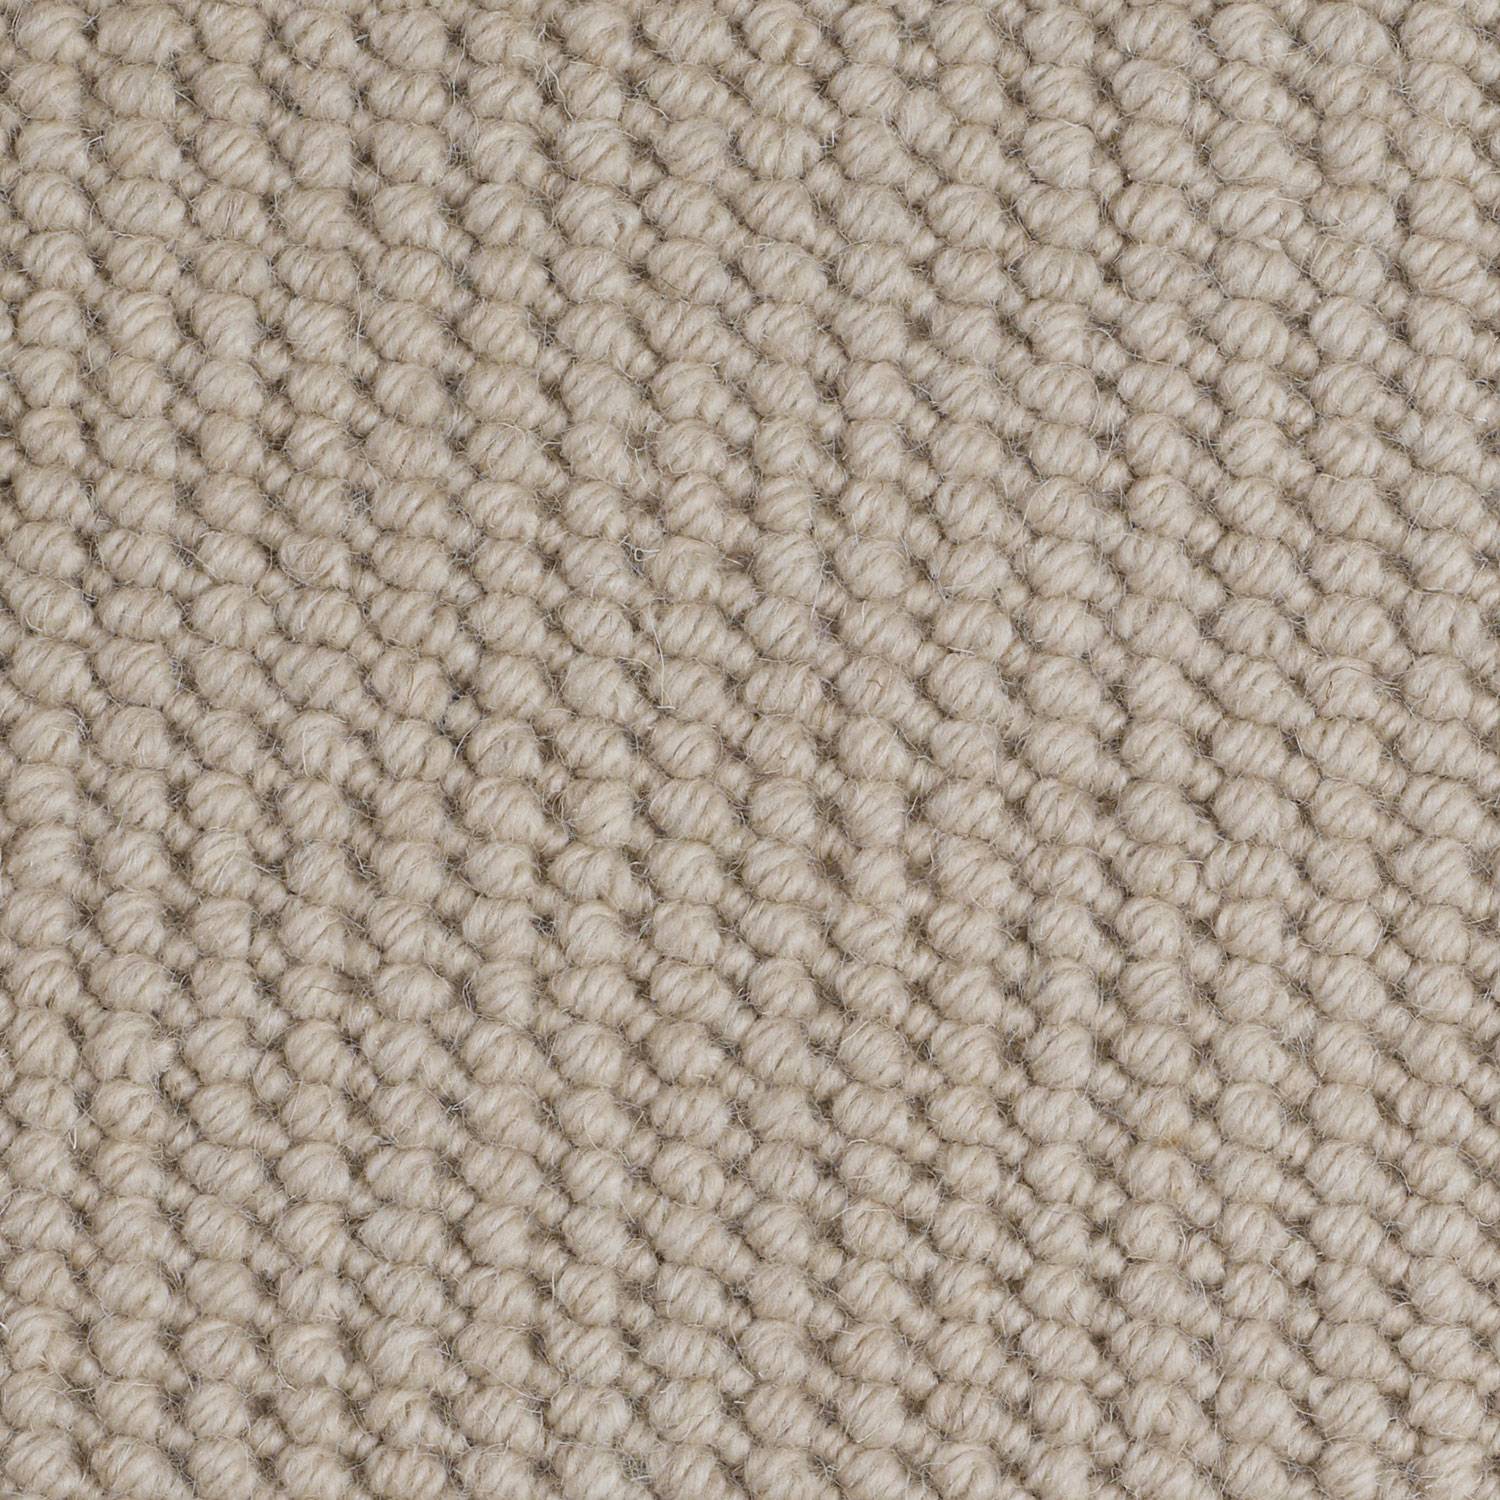 Mayfair: Wild Mushroom - 100% Wool Carpet